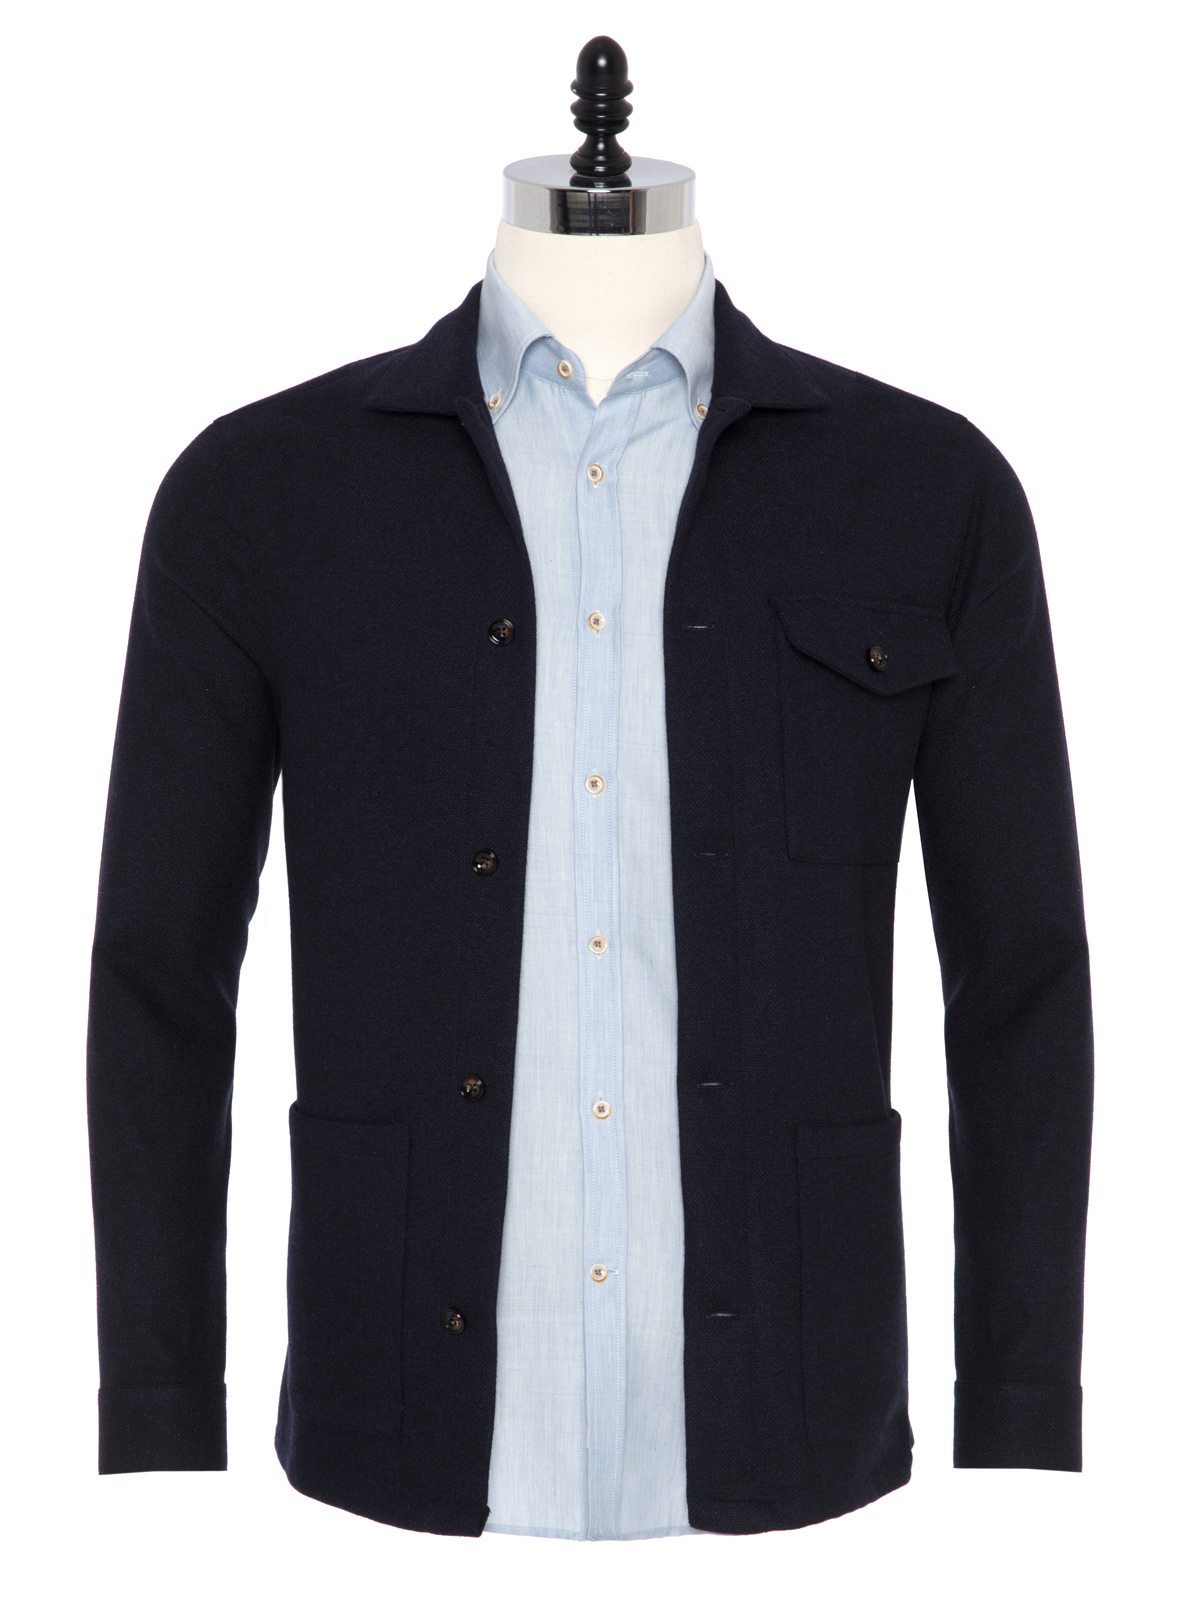 Germirli - Germirli Lacivert %100 Yün Tailor Fit Wool Heritage Ceket Gömlek